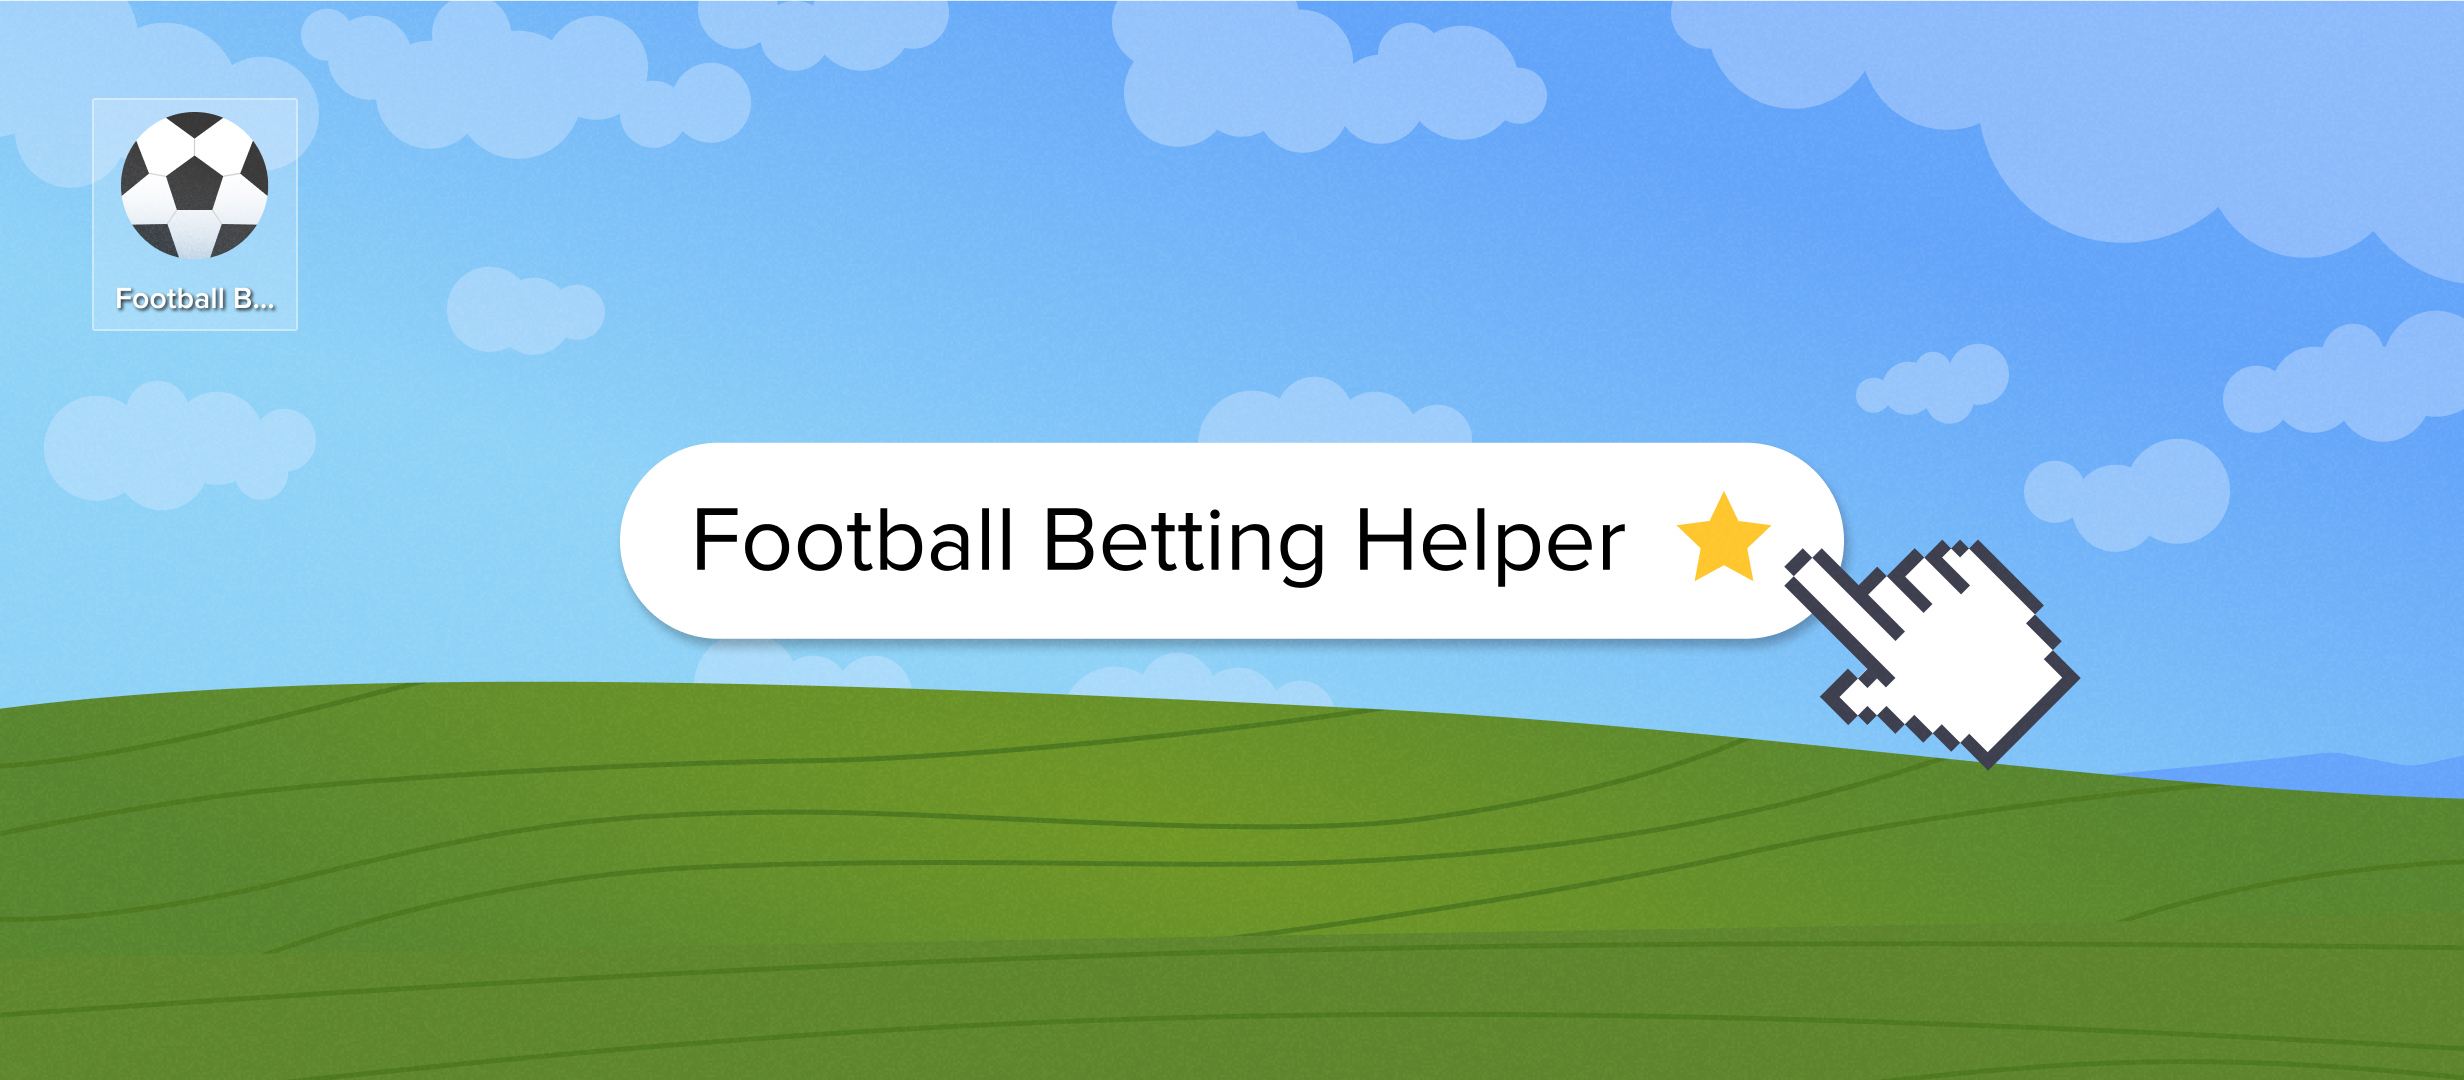 Полезные сайты для ставок на спорт: Football Betting Helper